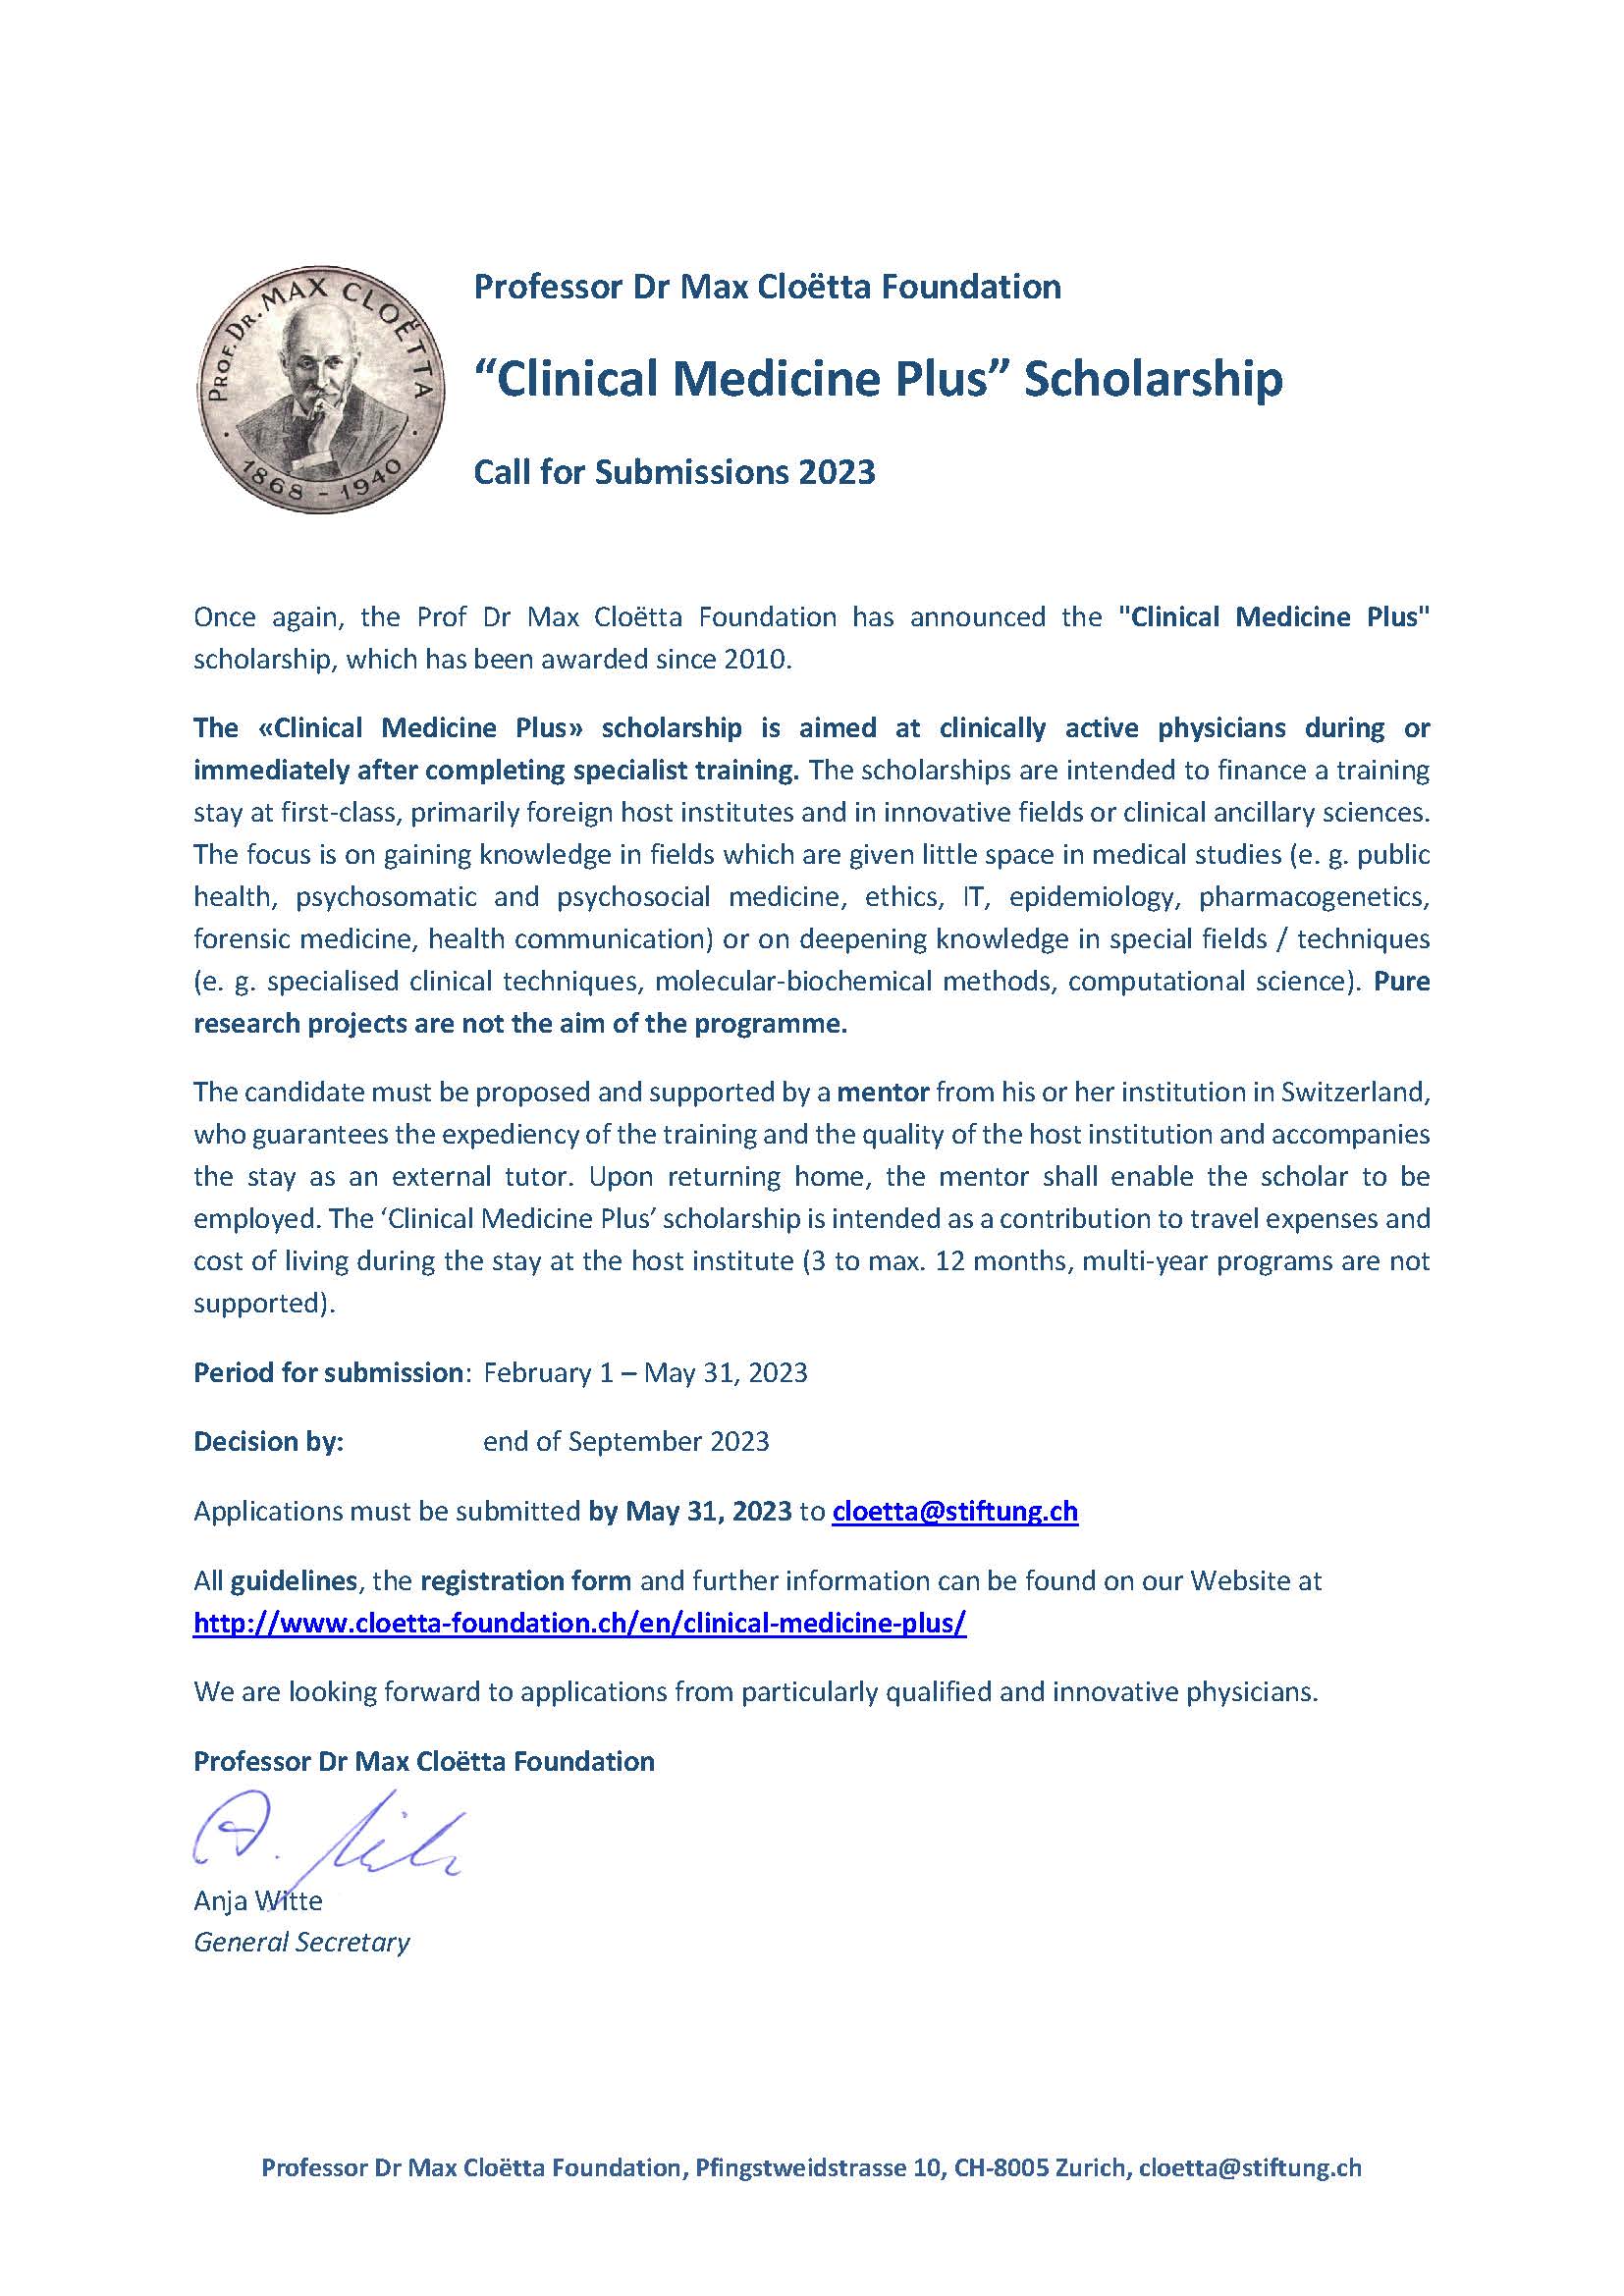 CLOETTA_ClinMedPlus_Scholarship Announcement_2023_EN.jpg